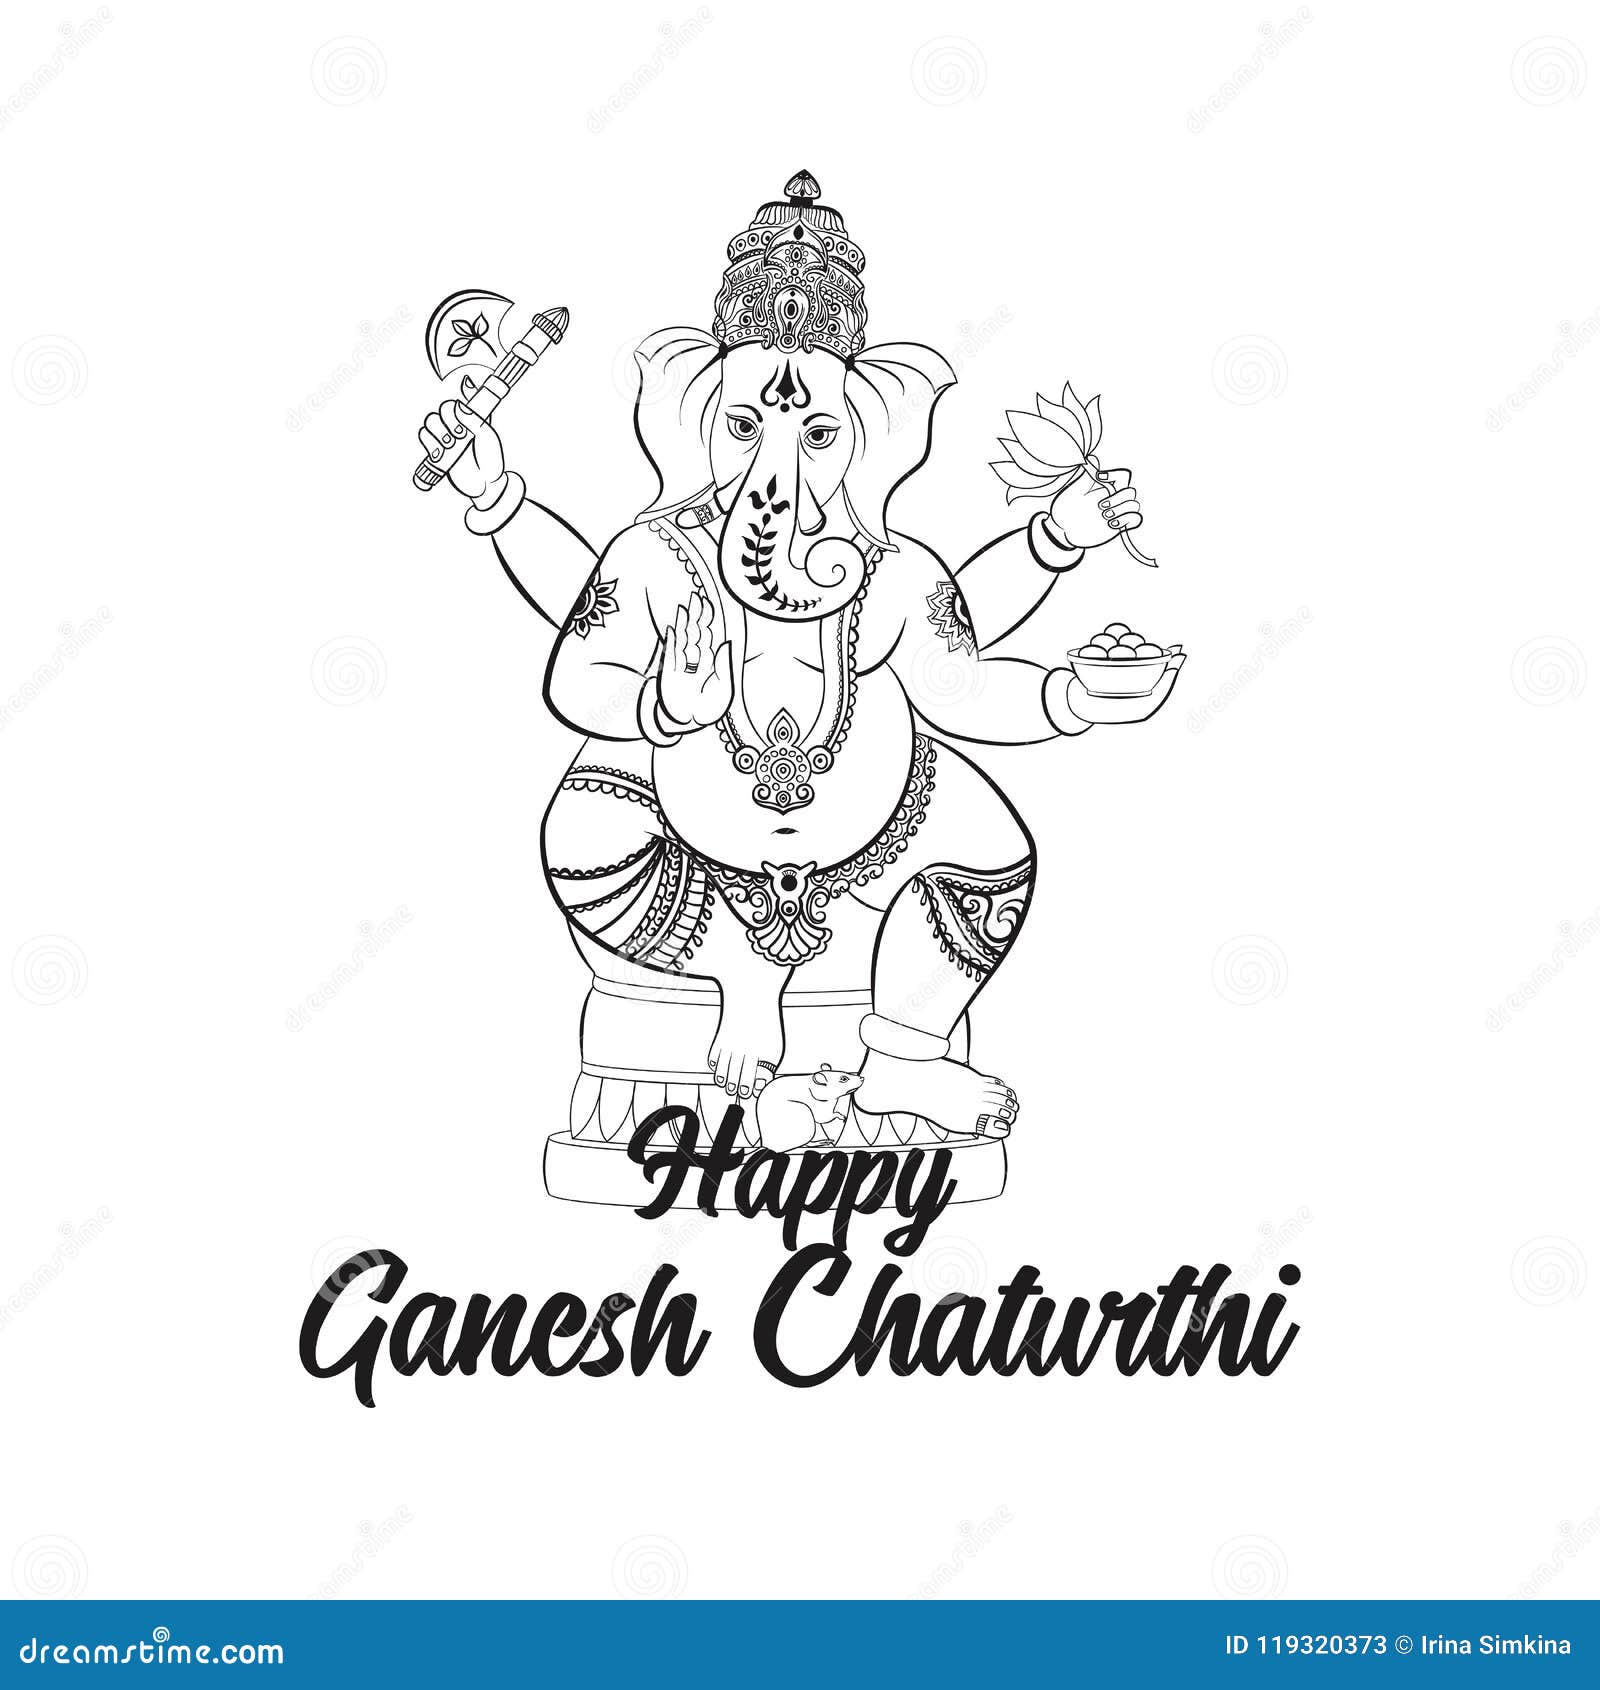 Easy To Edit Vector Illustration of Lord Ganpati on Ganesh Chaturthi  Background Stock Vector - Illustration of faith, festival: 119320373